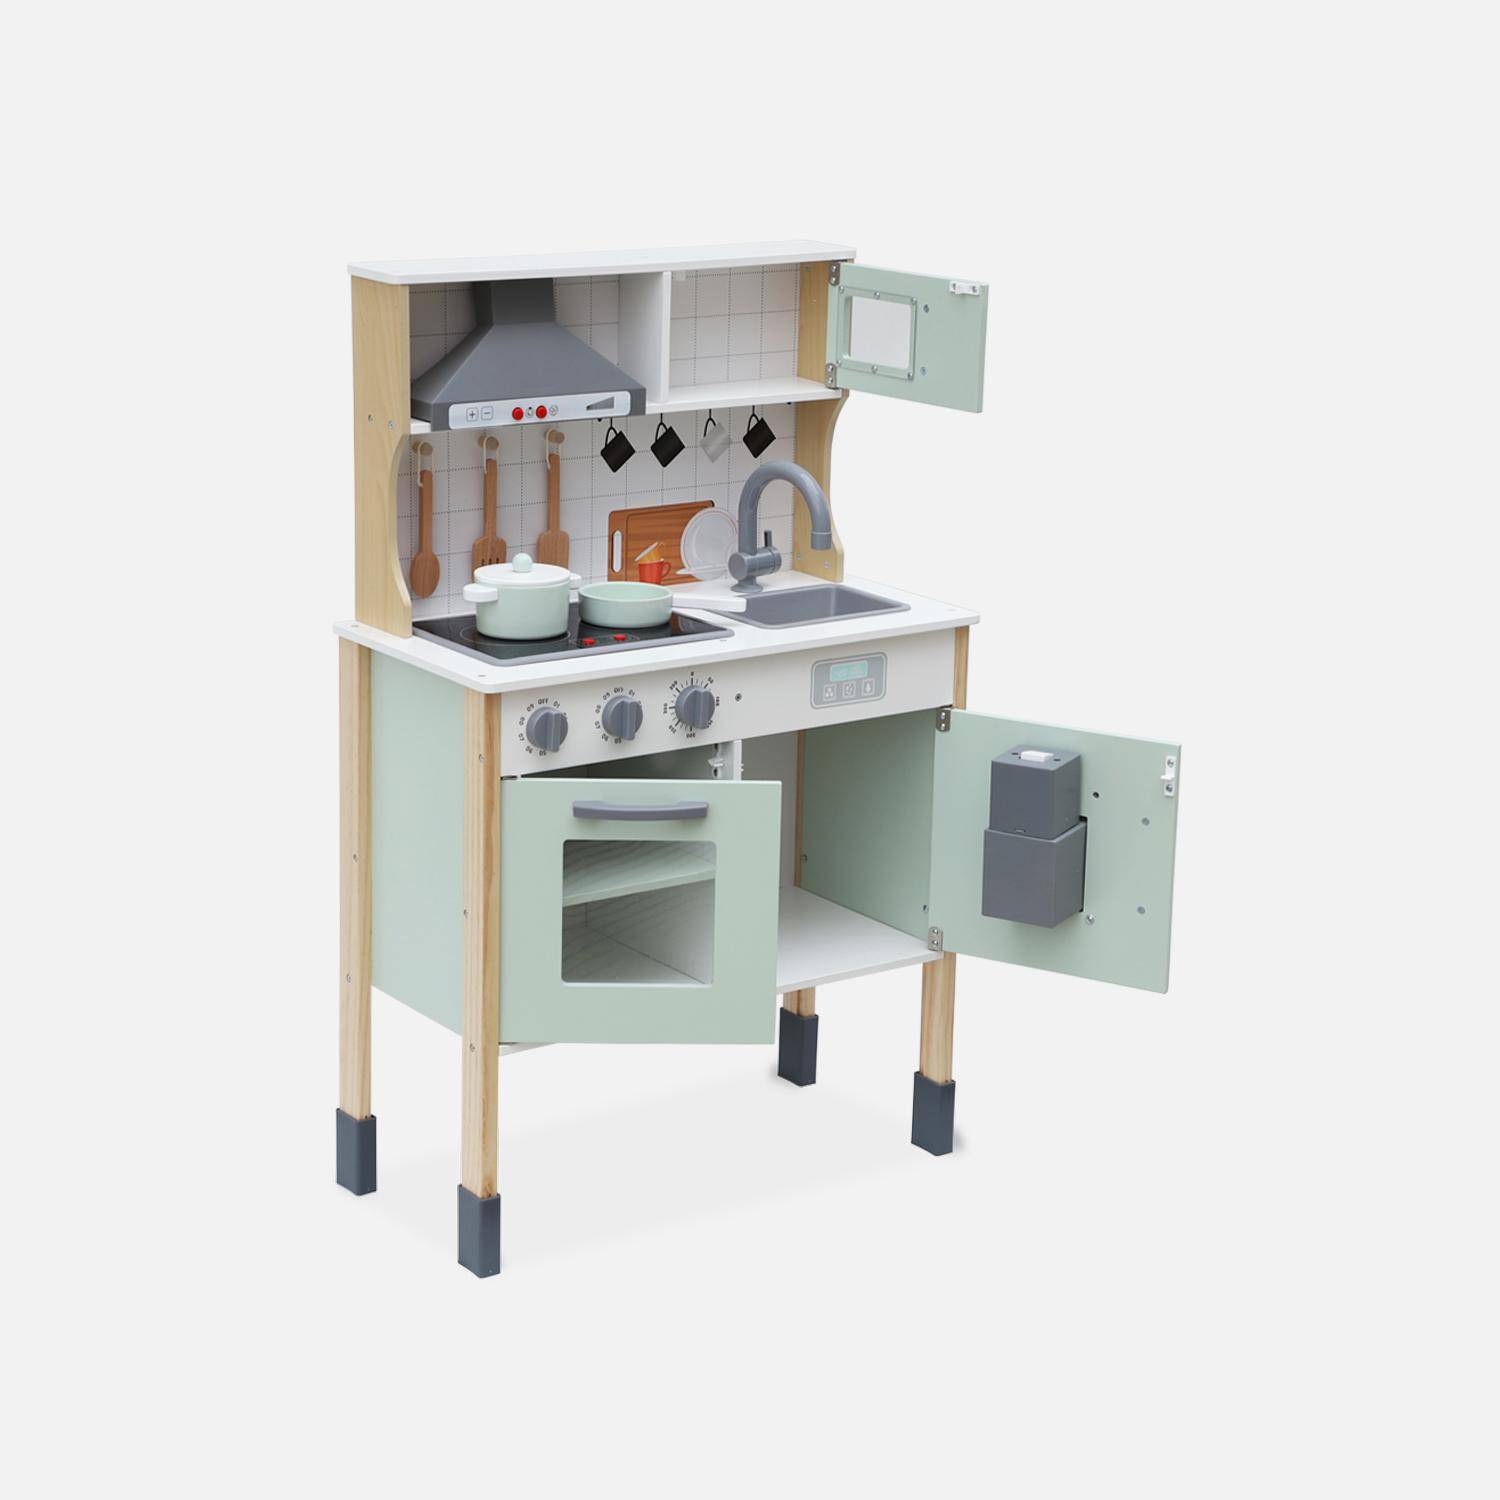 Panel de cocina infantil, accesorios incluidos, campana, placa de cocción, microondas electrónico Photo7